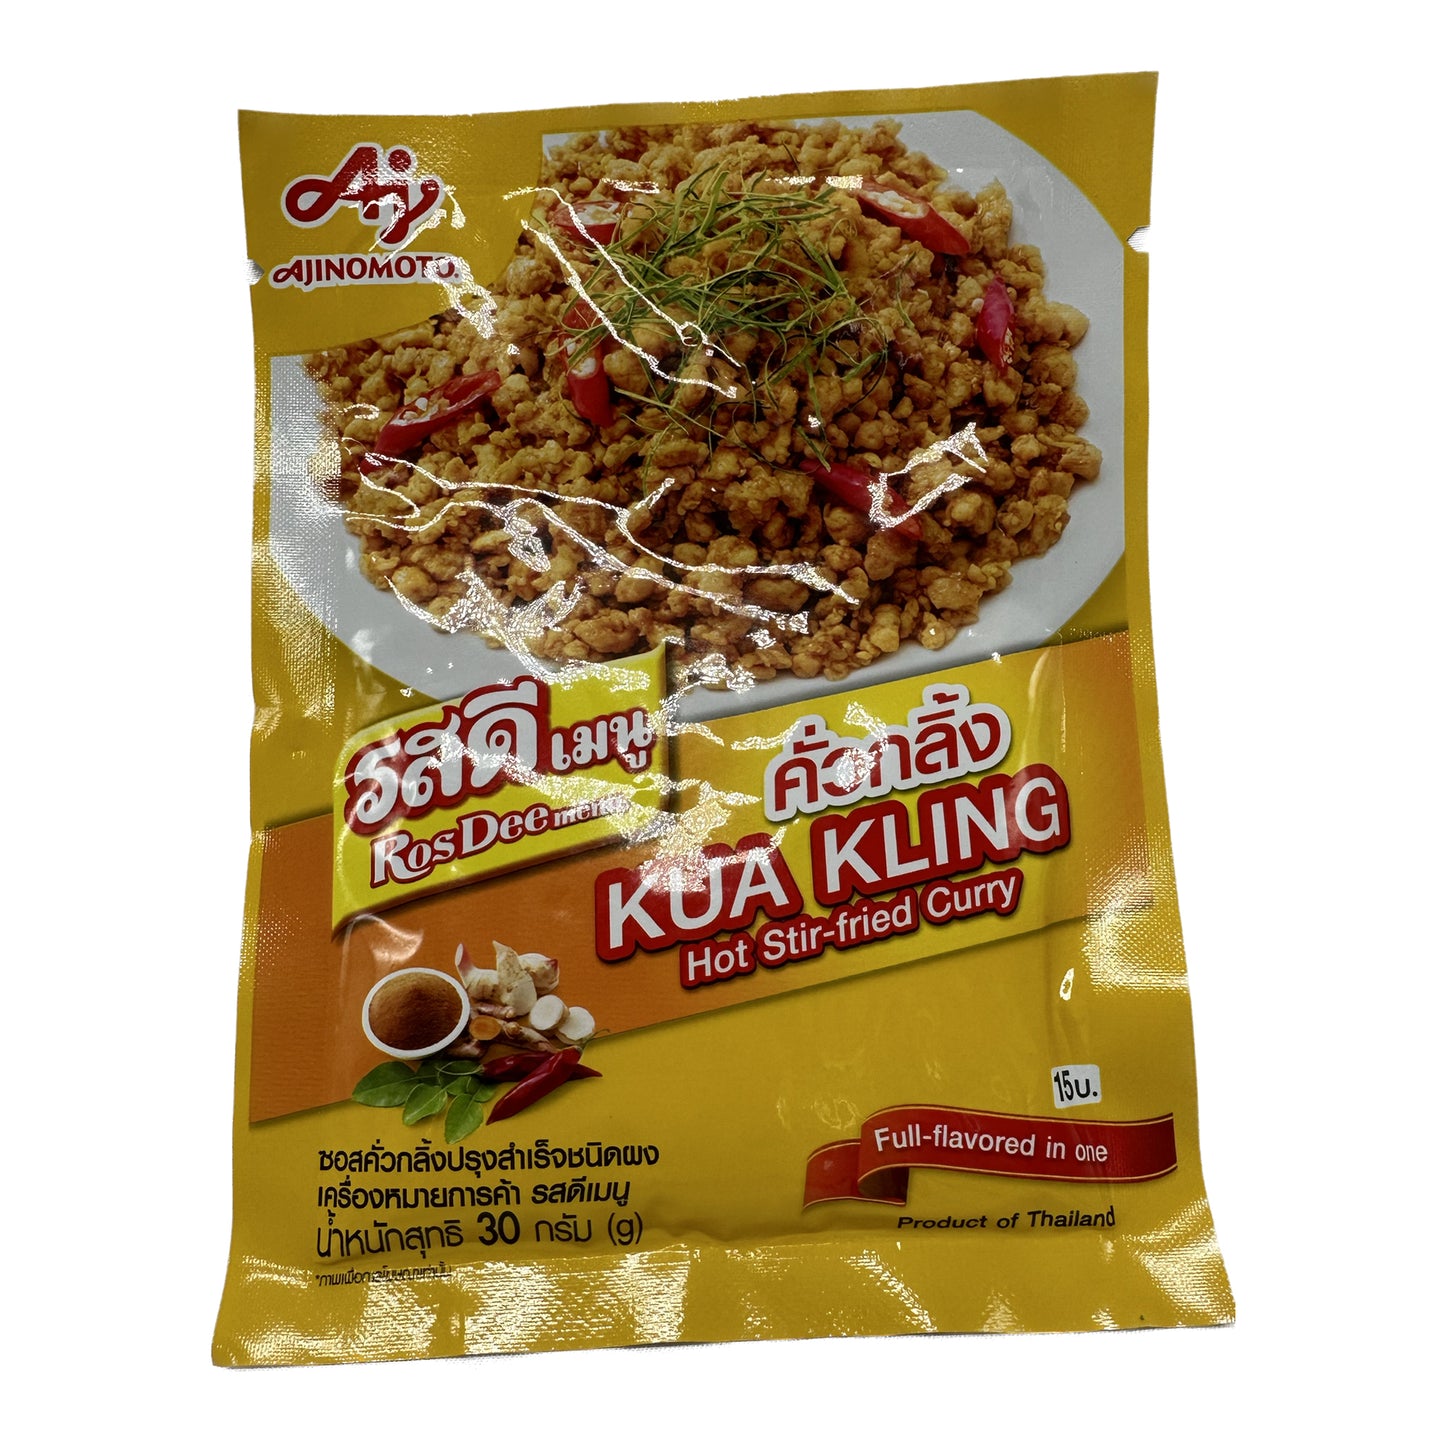 RosDee Menu Kua Kling Sauce Powder Hot Stir Fried Curry คั่วกลิ้งตรารสดี - 30g